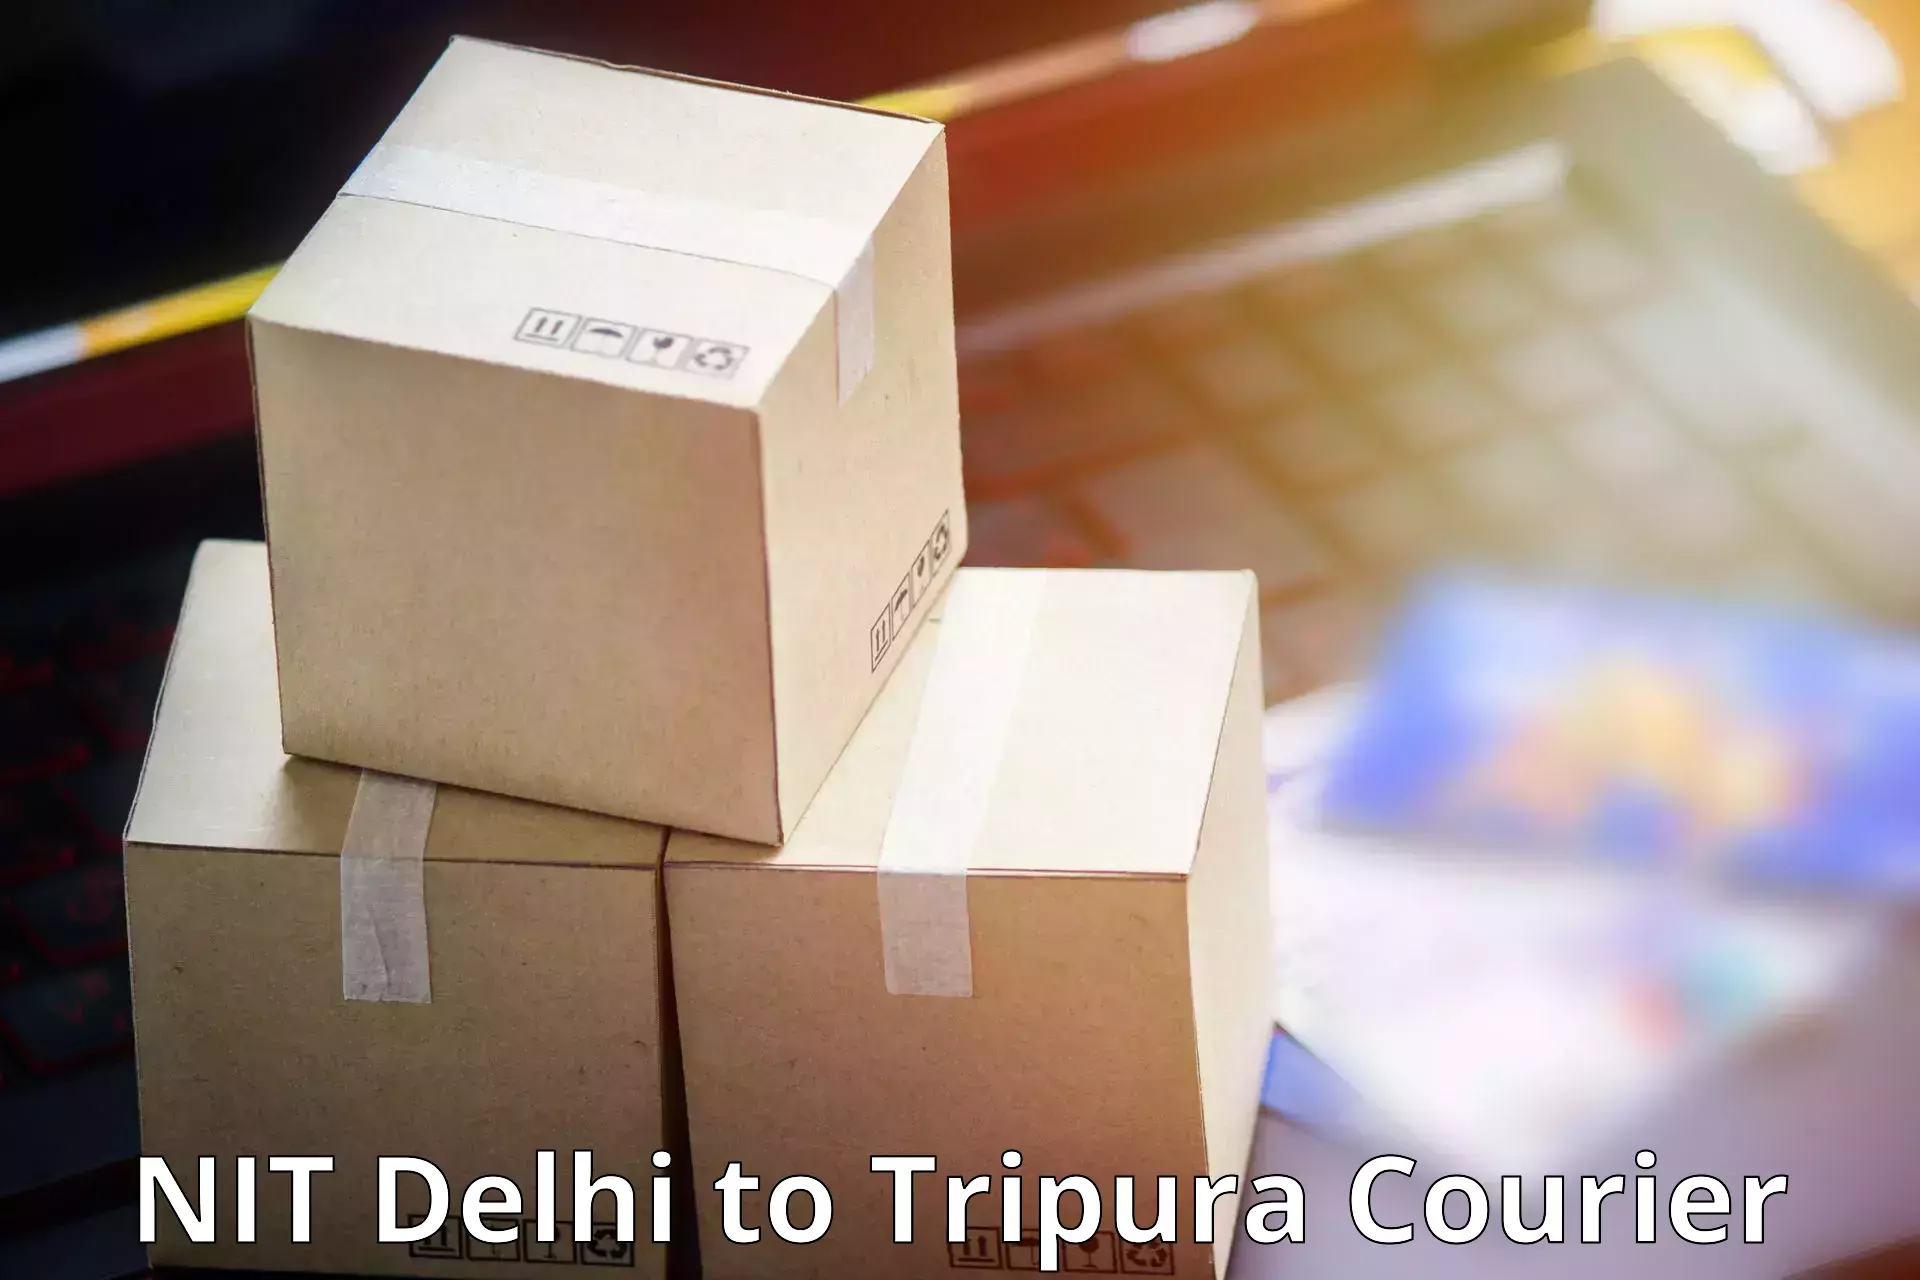 Weekend courier service NIT Delhi to Udaipur Tripura